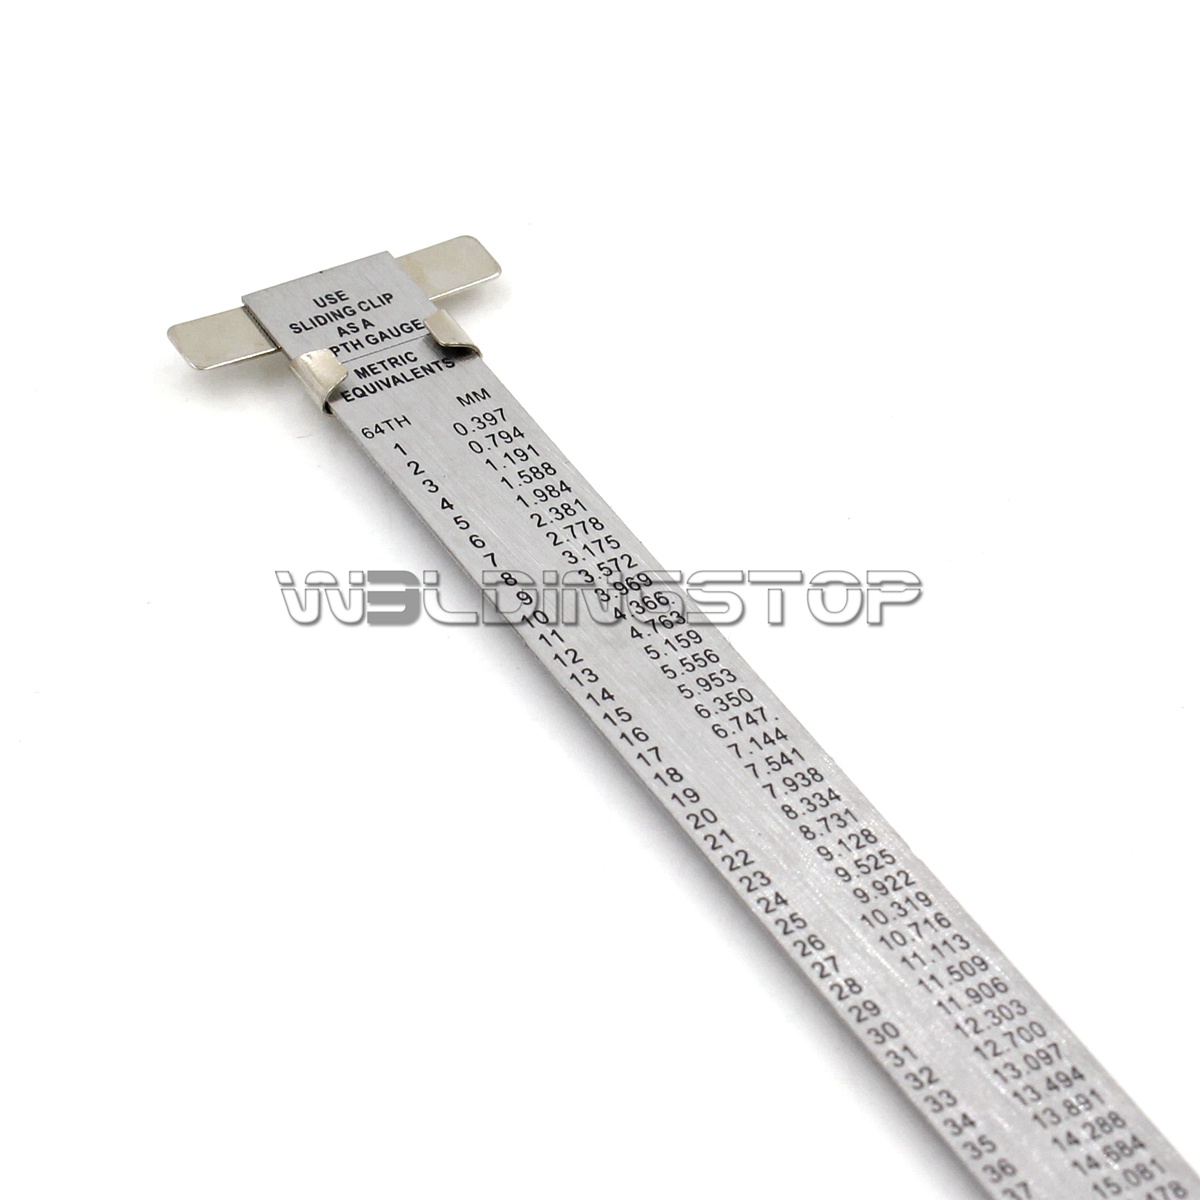 Stainless Steel muli-use ruler inch metric equivalent Depth Gauge pocket clip 